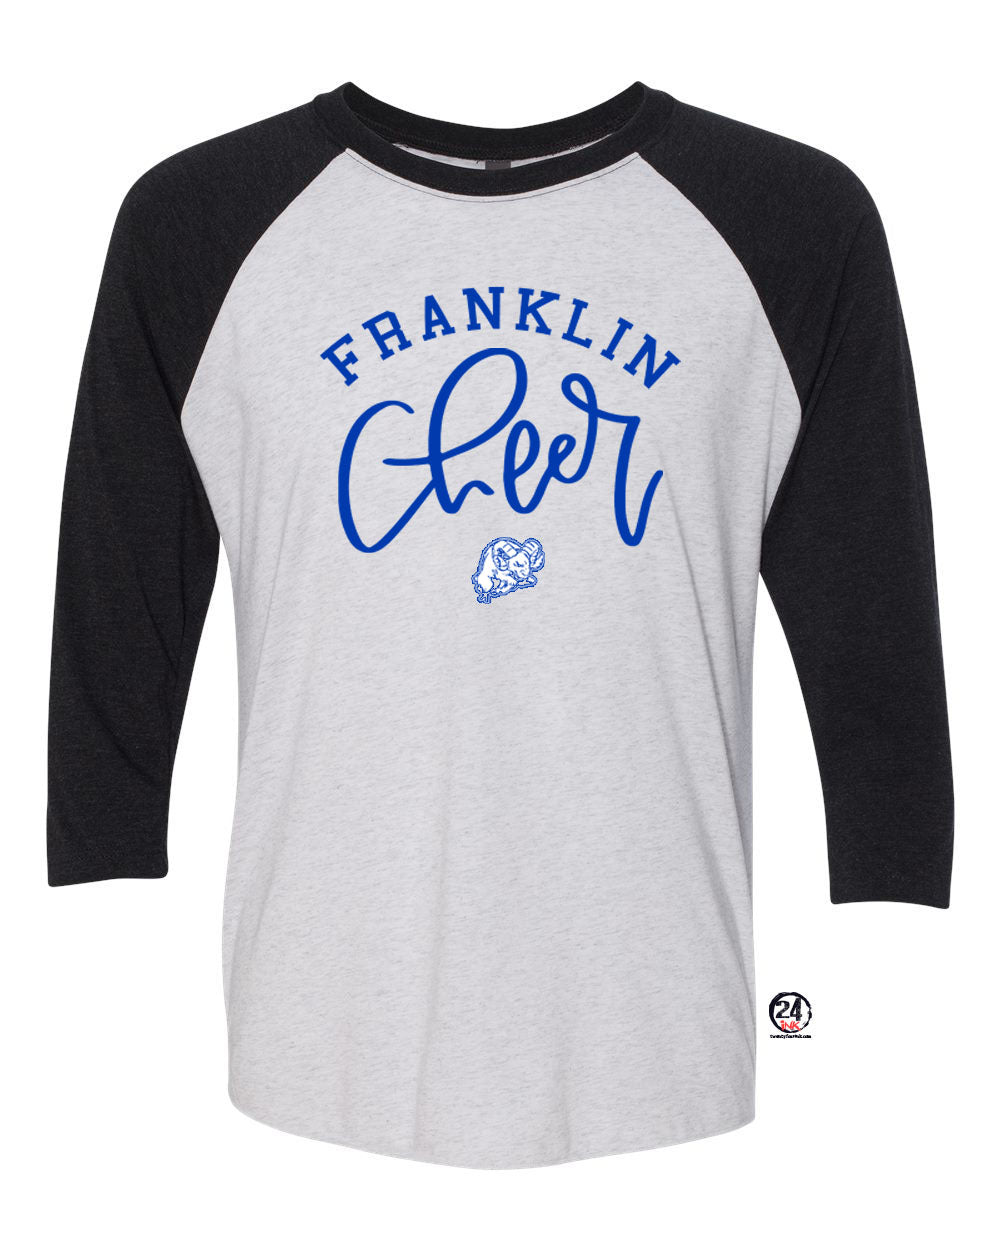 Franklin Cheer Design 3 raglan shirt